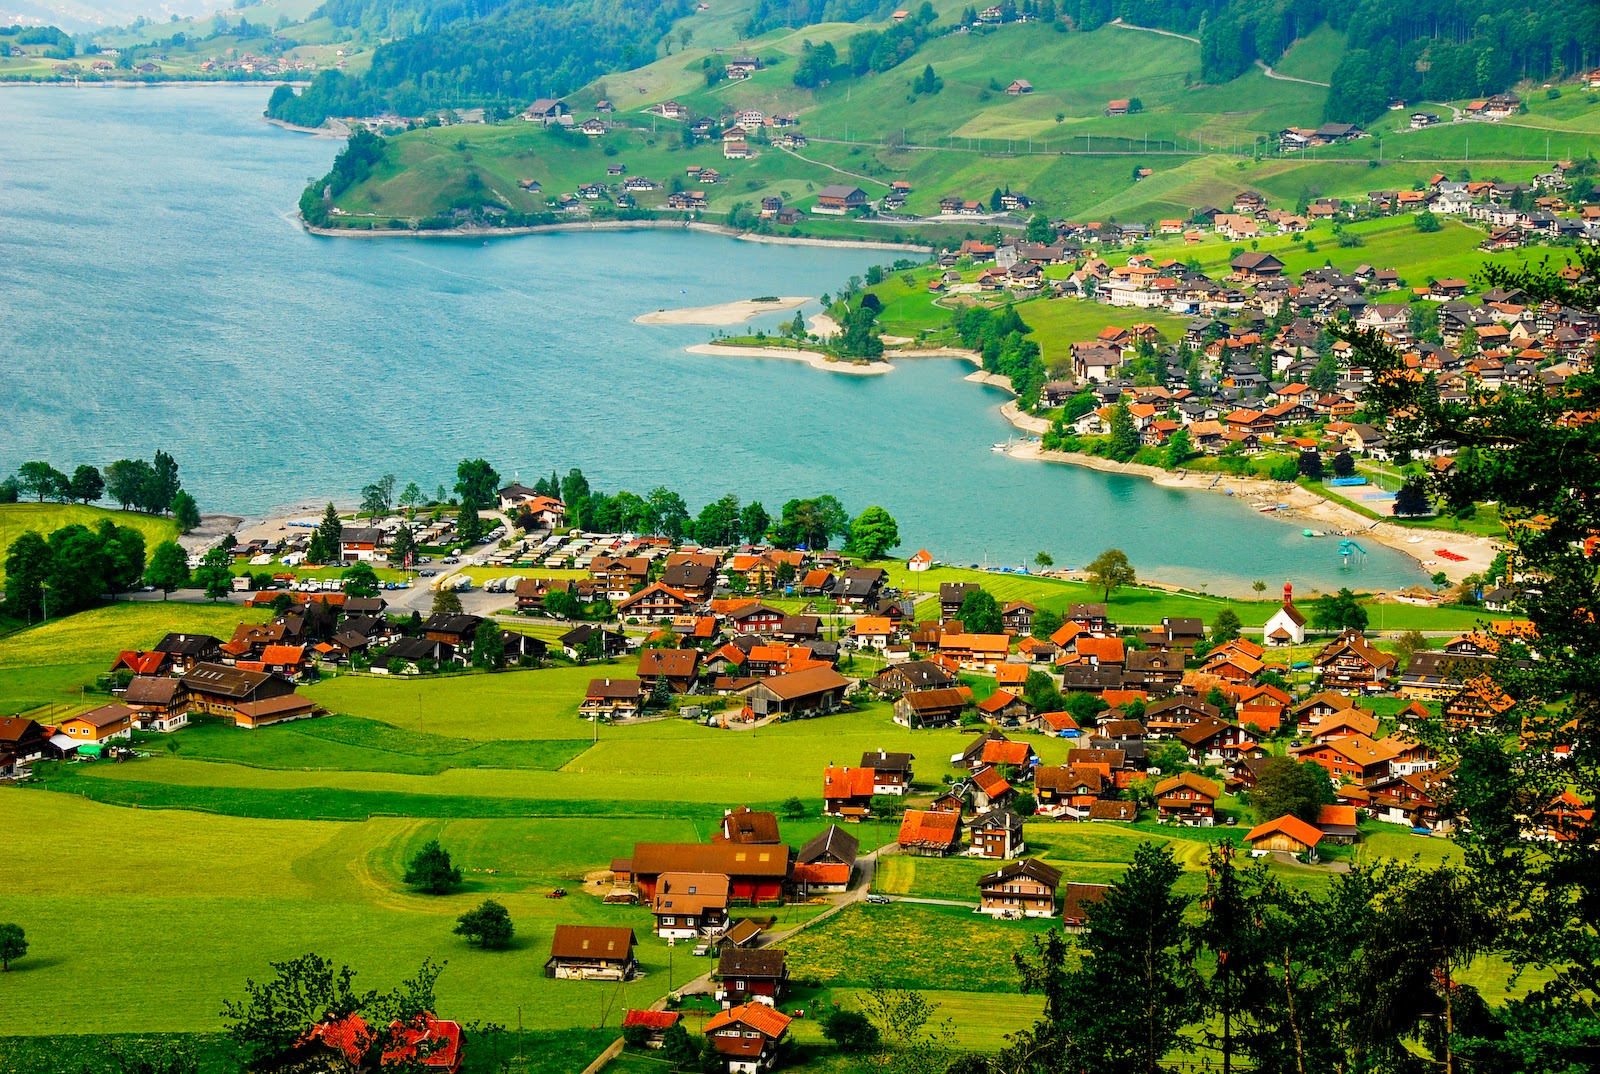 Beautiful Scenery in Switzerland